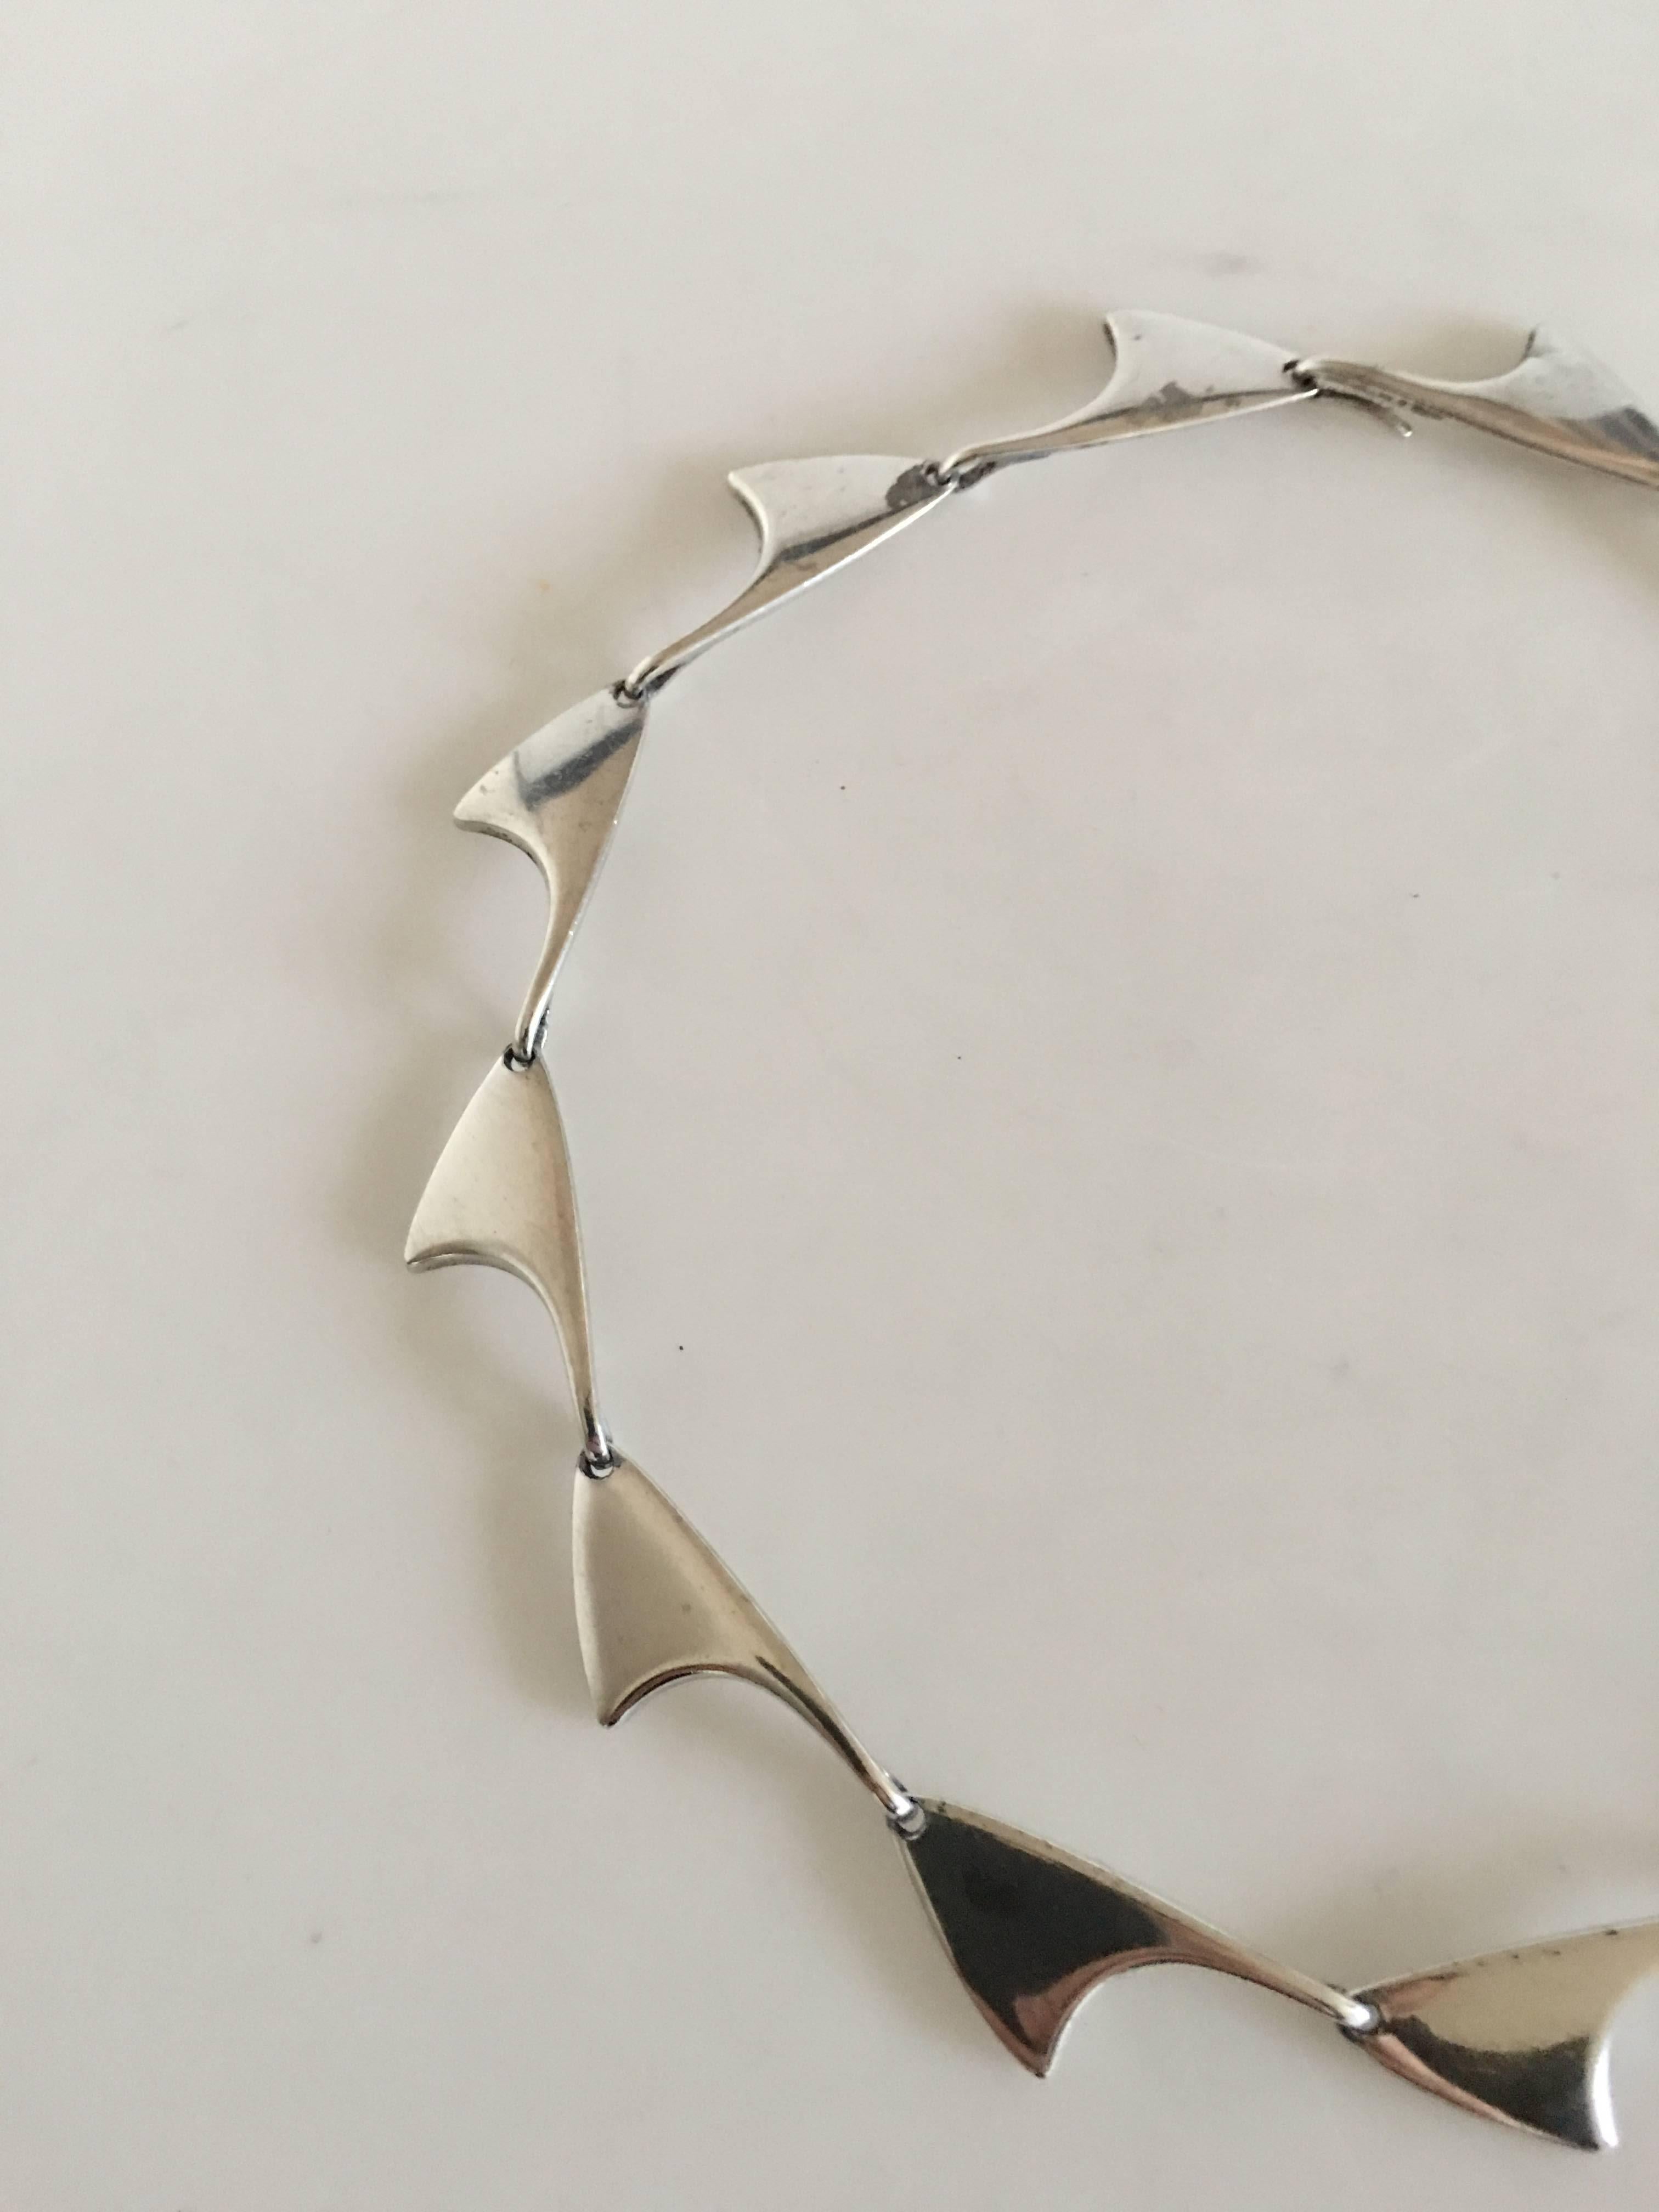 Hans Hansen sterling silver shark fin necklace #125. Measures: 38 cm L (14 61/64